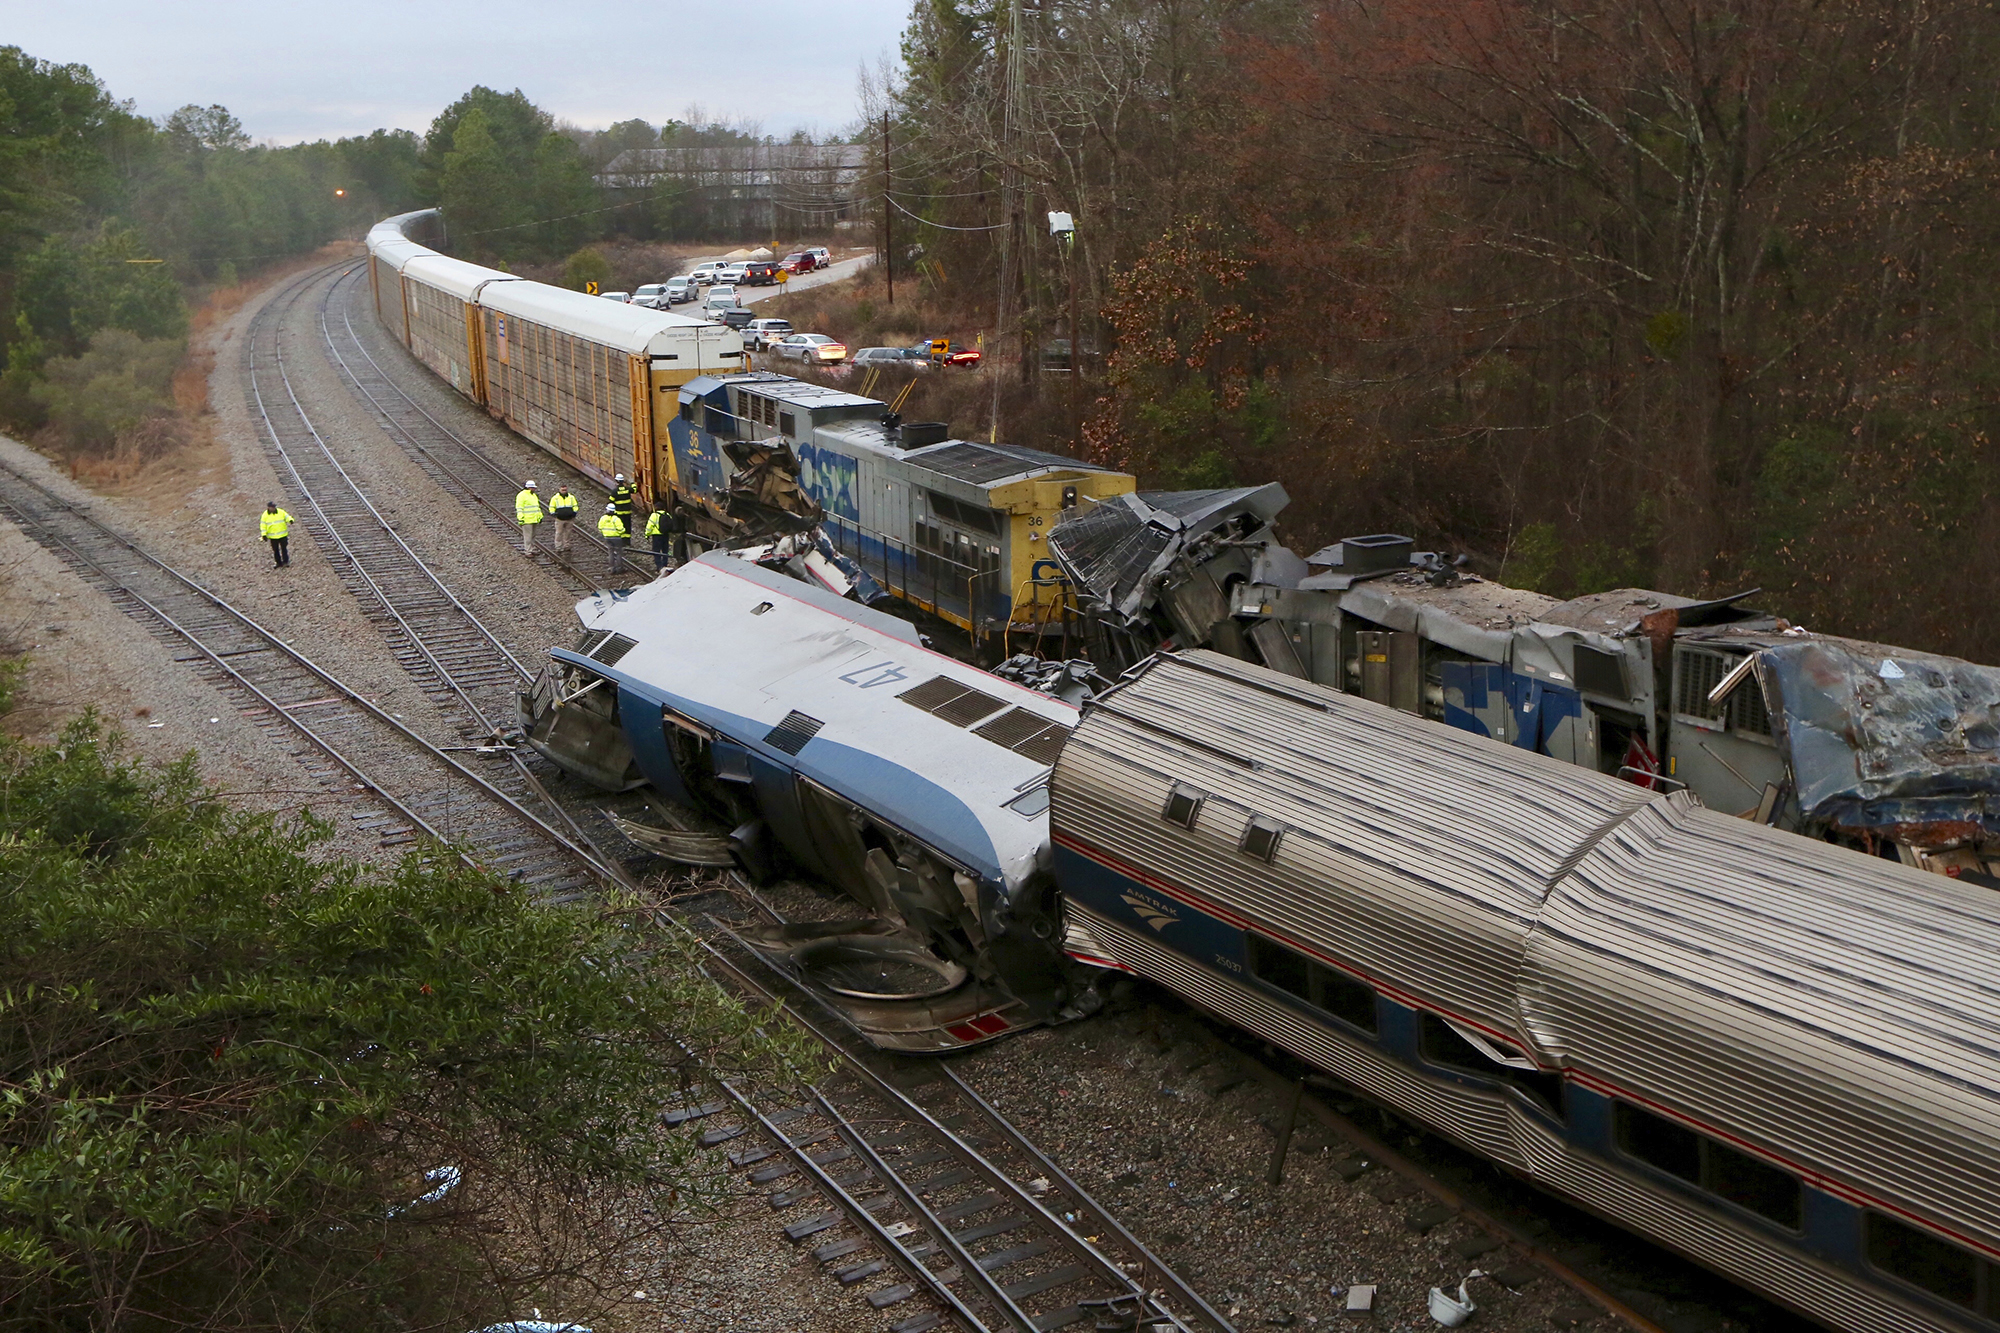 PHOTO: Authorities investigate the scene of a fatal Amtrak train crash in Cayce, S.C., Feb. 4, 2018.